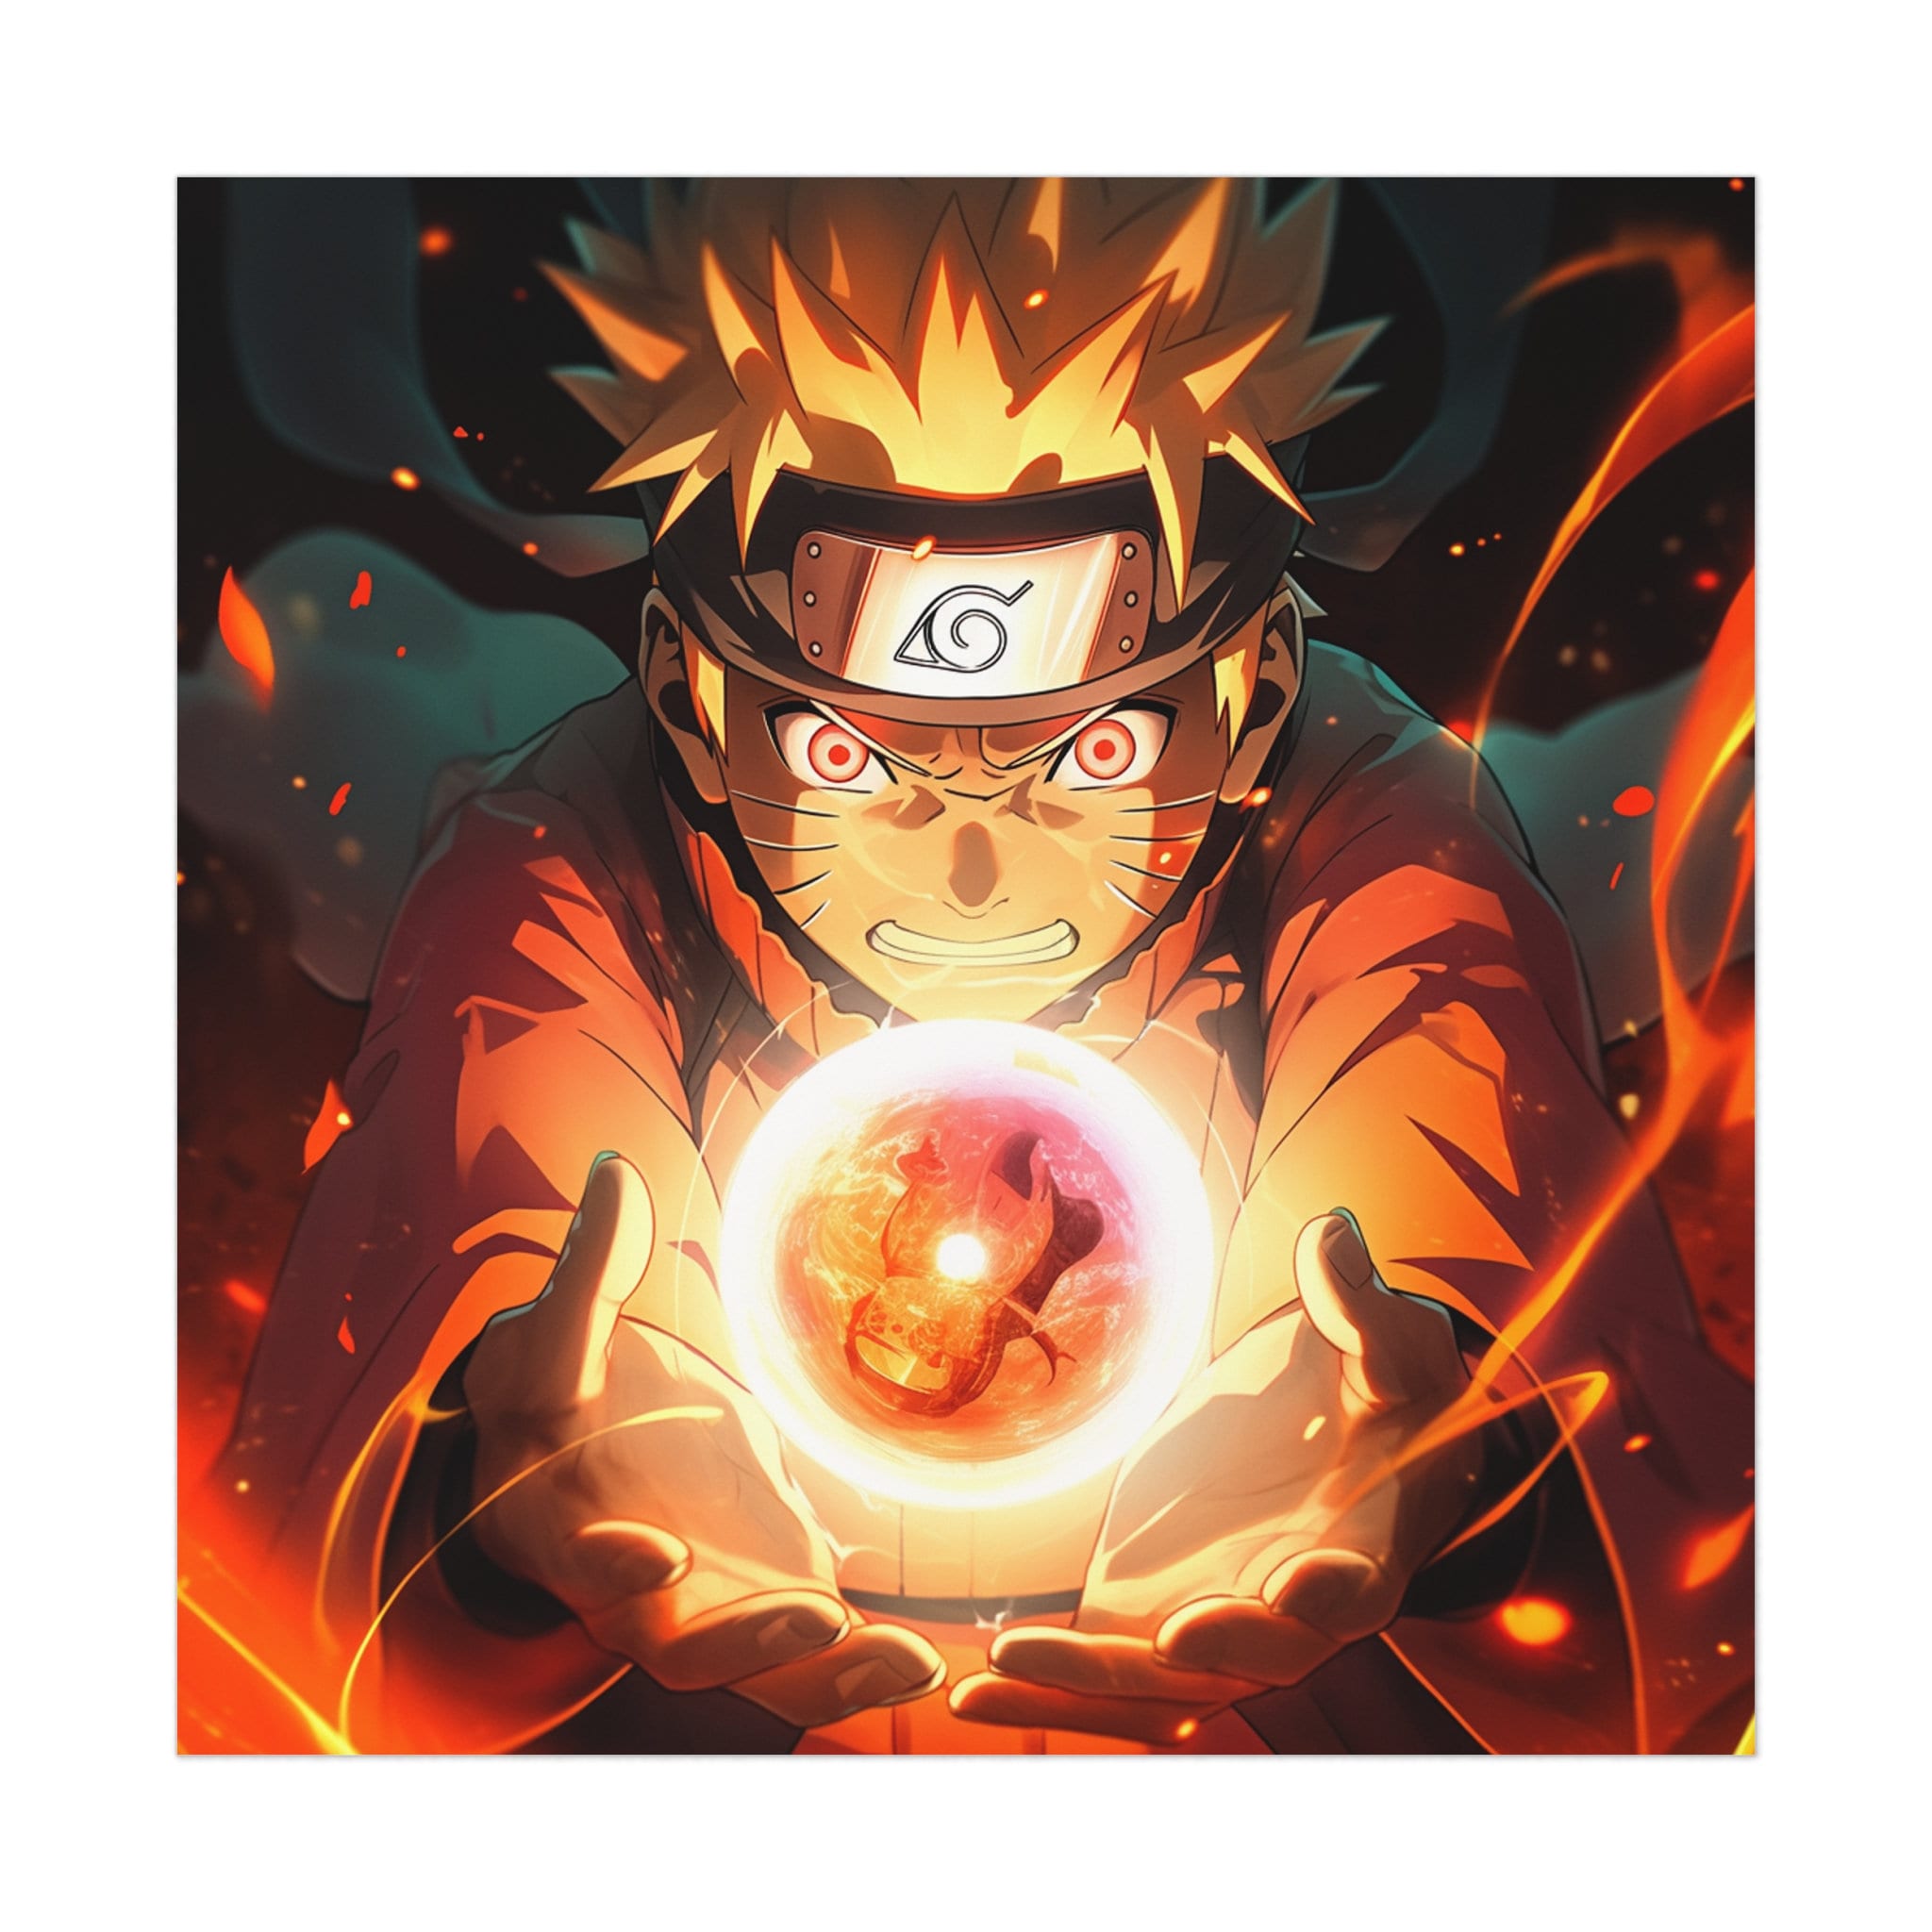 Naruto Shippuden Anime Poster 24x36 inch Fast Shipping NEW  eBay